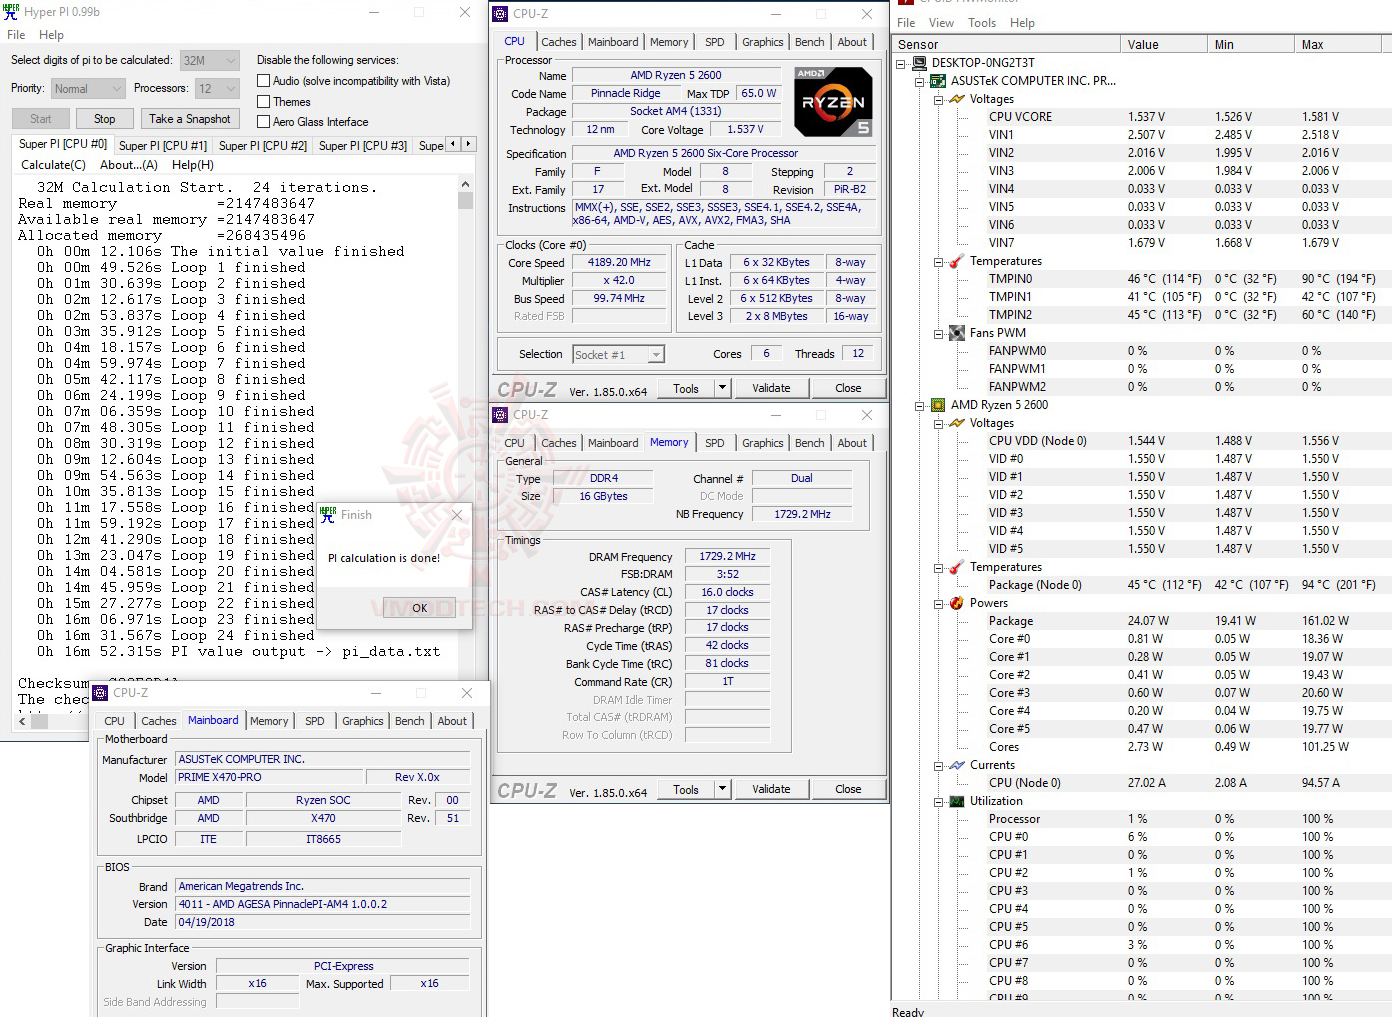 h32 2 AMD RYZEN 5 2600 PROCESSOR REVIEW